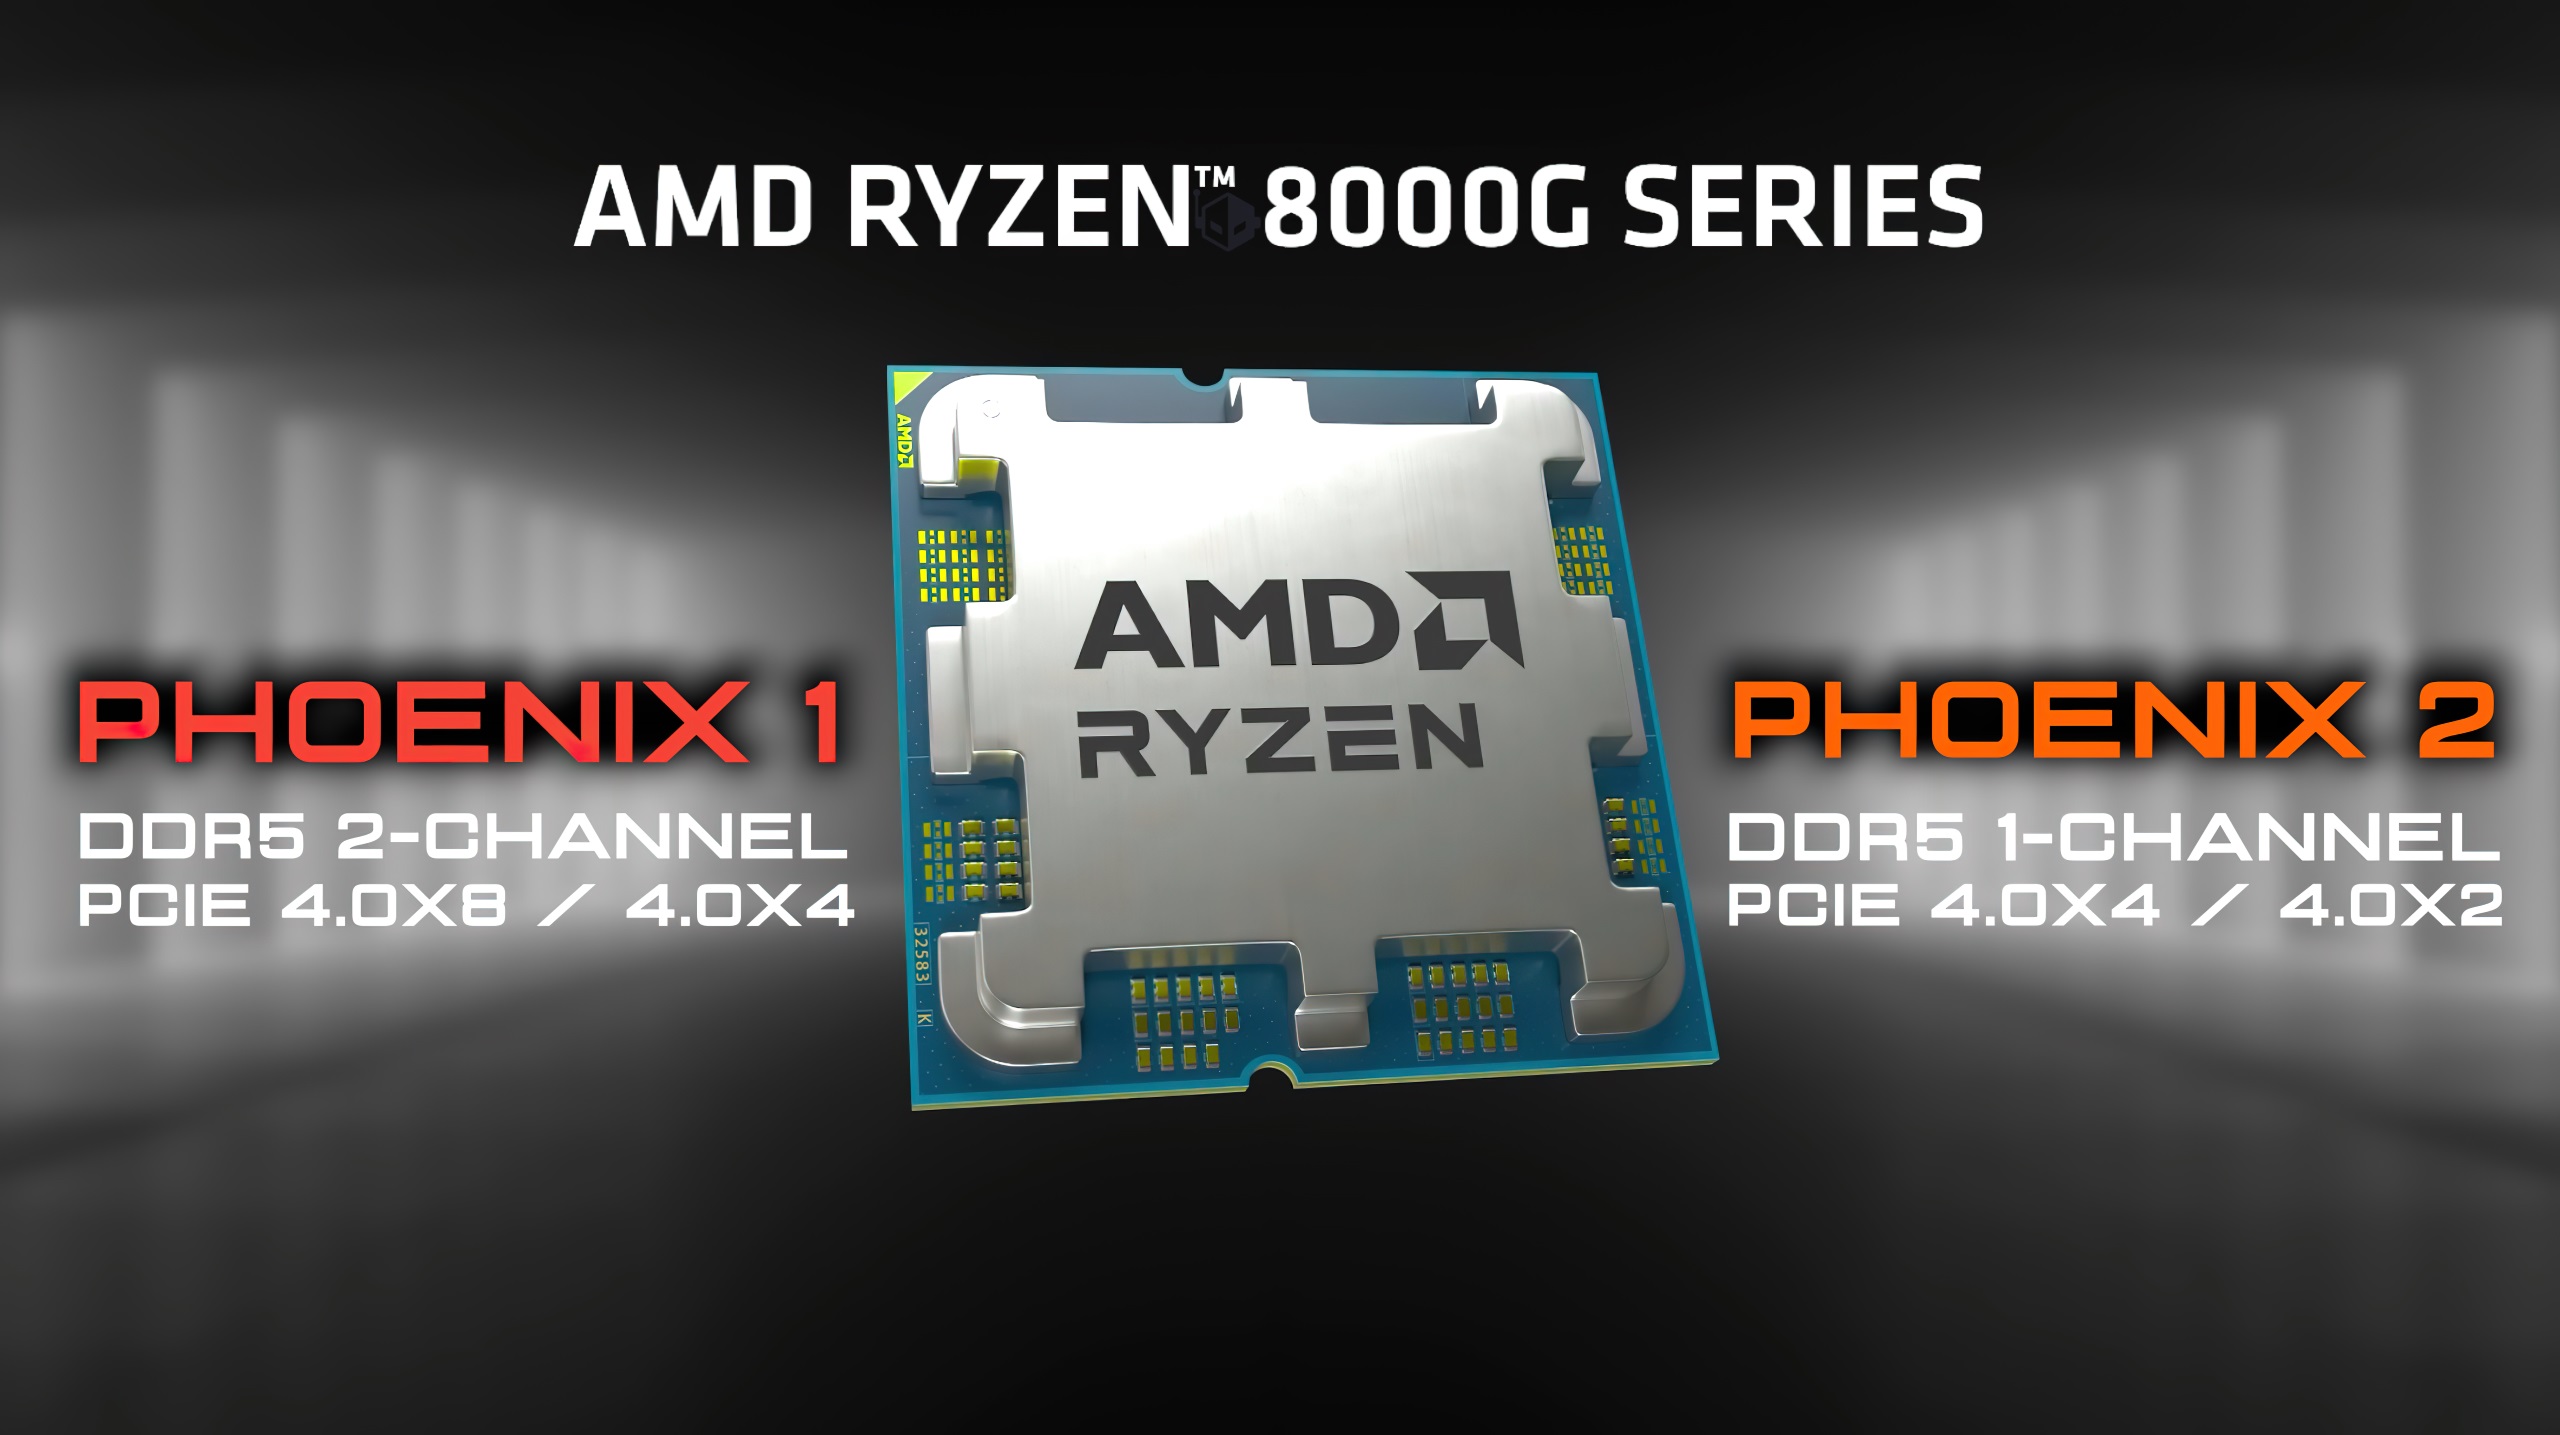 В APU AMD Ryzen 8000G Phoenix 2 вдвое урезали количество линий PCIe 4.0 для видеокарт и накопителей по сравнению с Phoenix 1